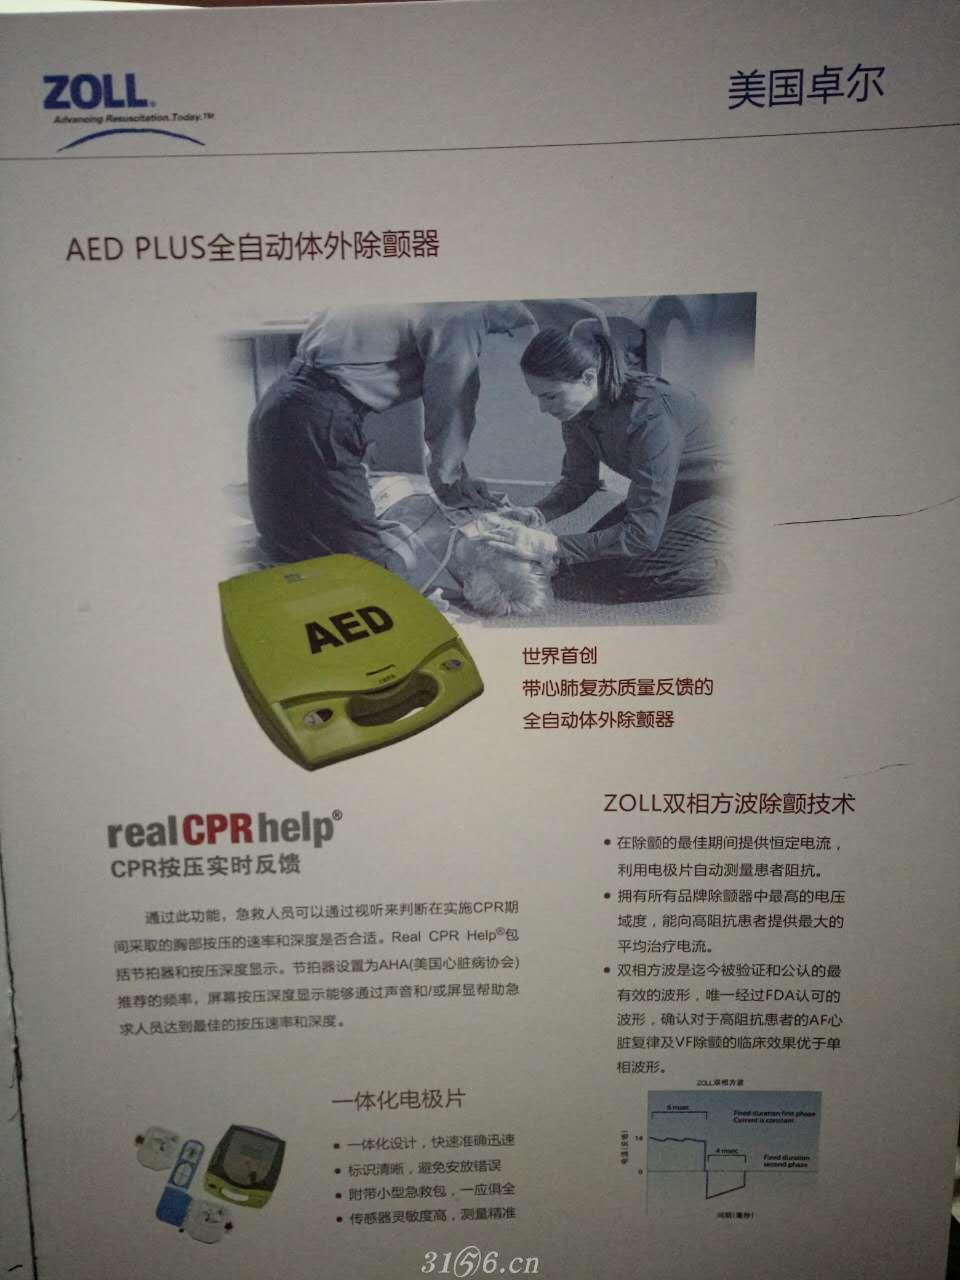 AED PLUS全自动体外除颤器招商